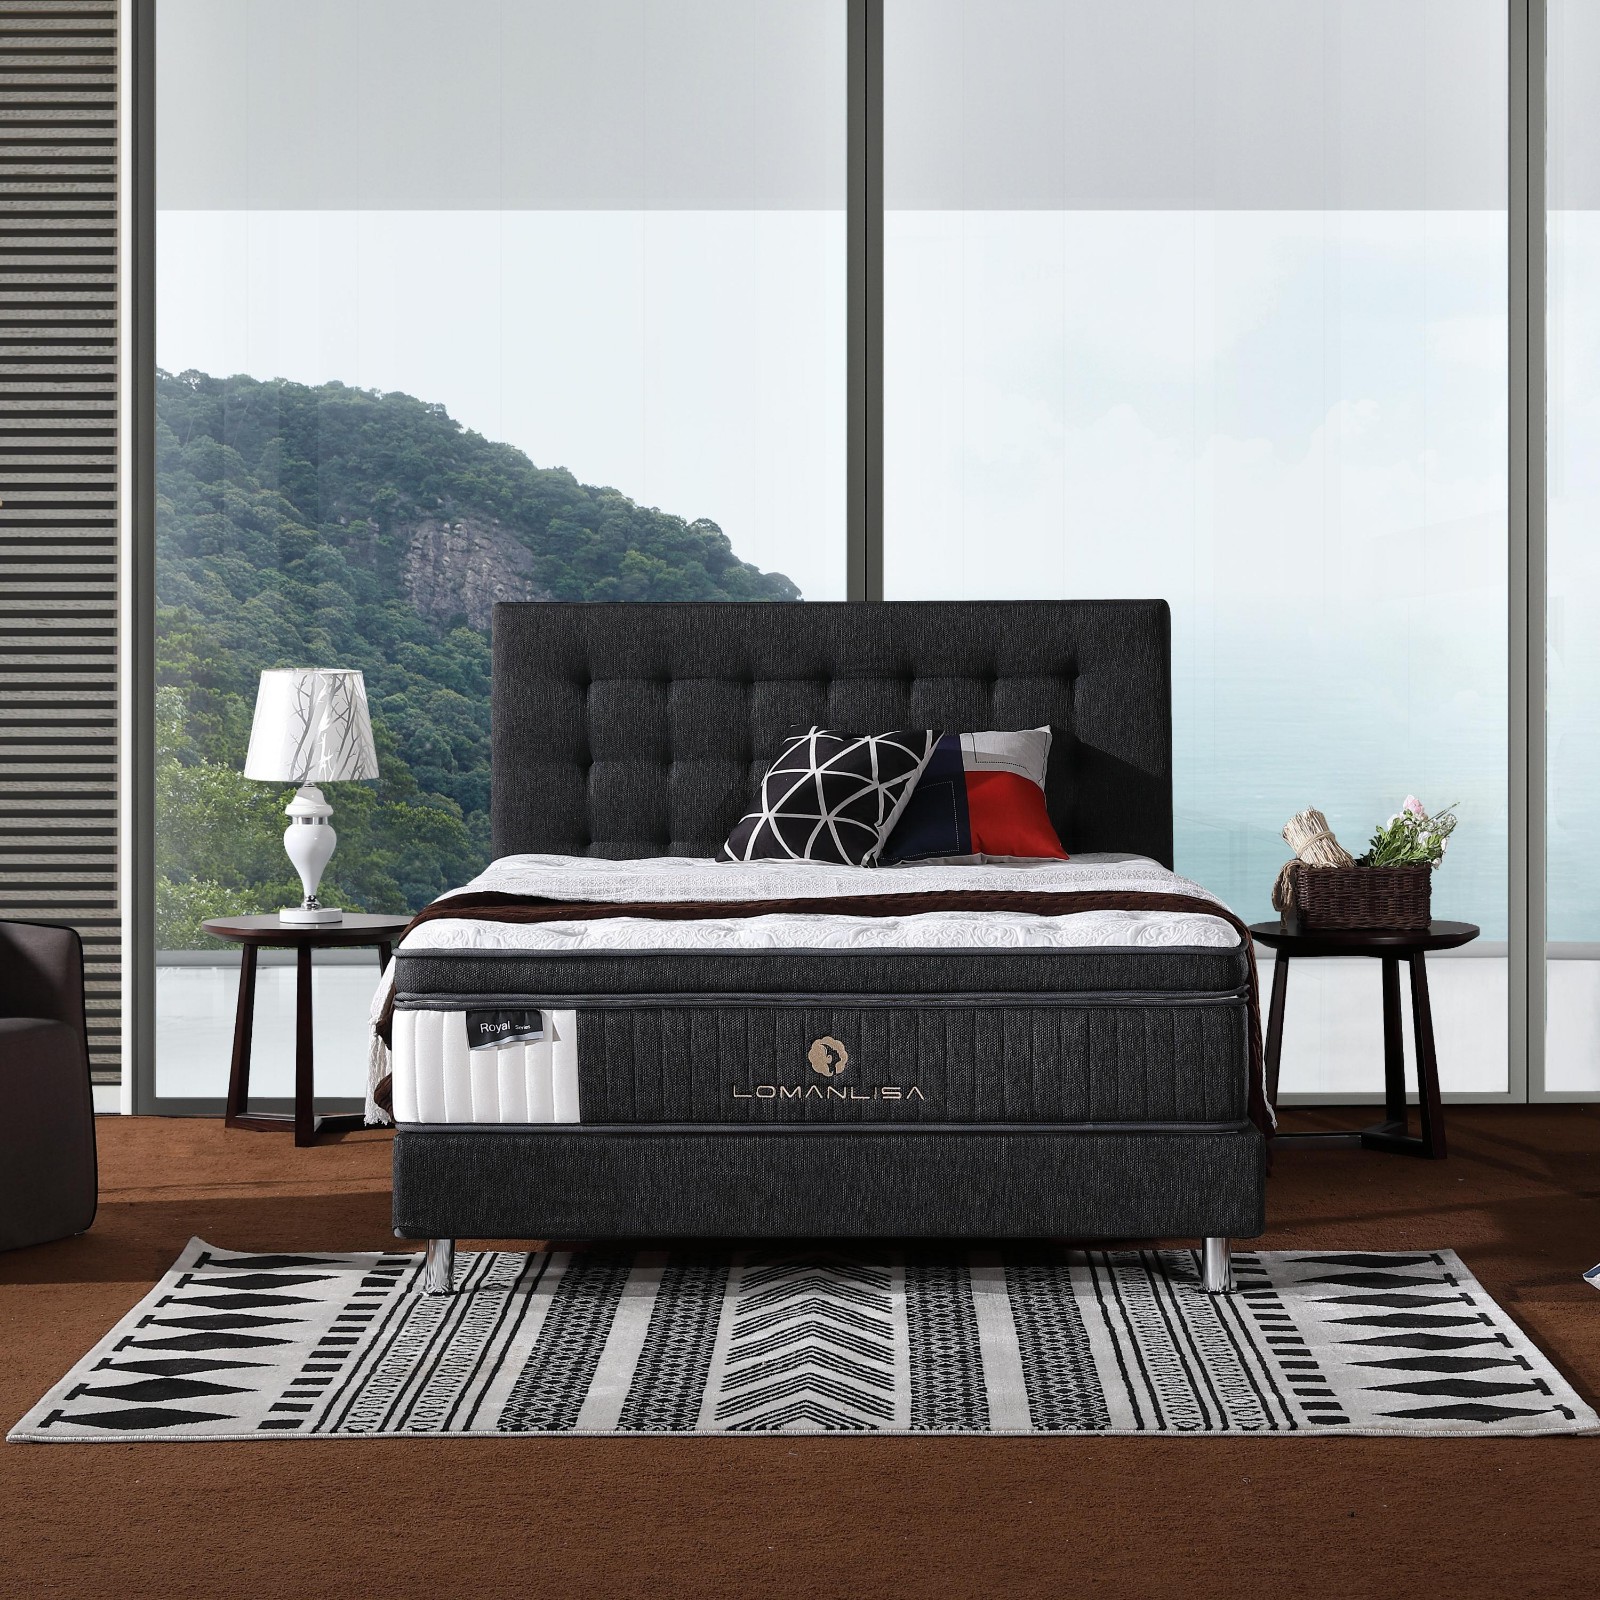 JLH best wool mattress topper Certified for bedroom-3